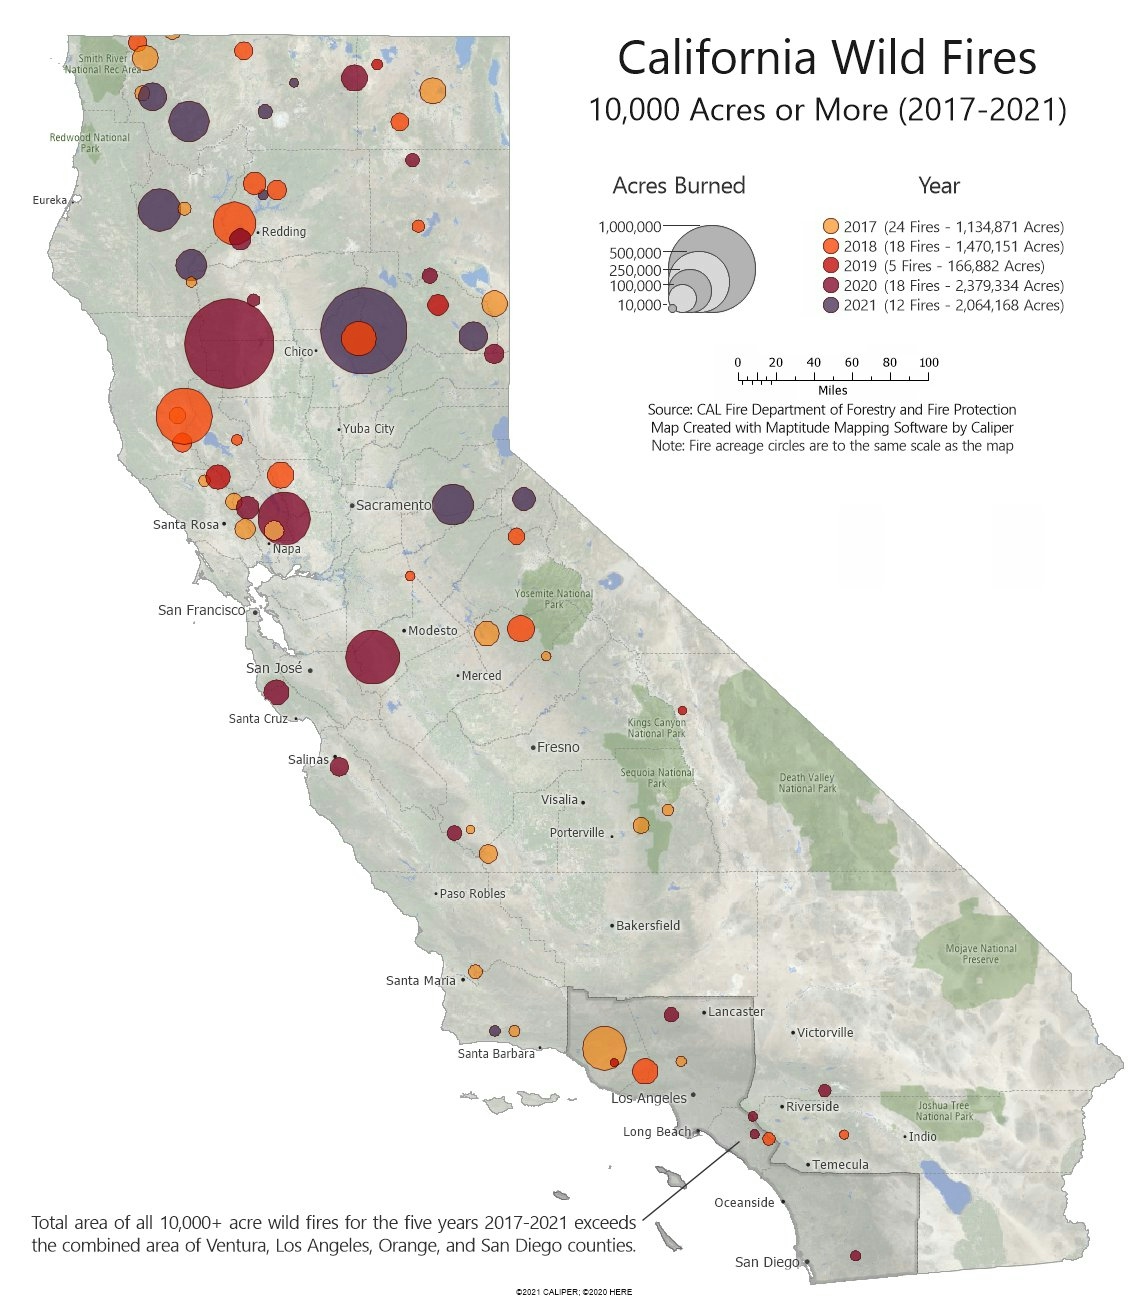 California Wild Fires 2017-2021